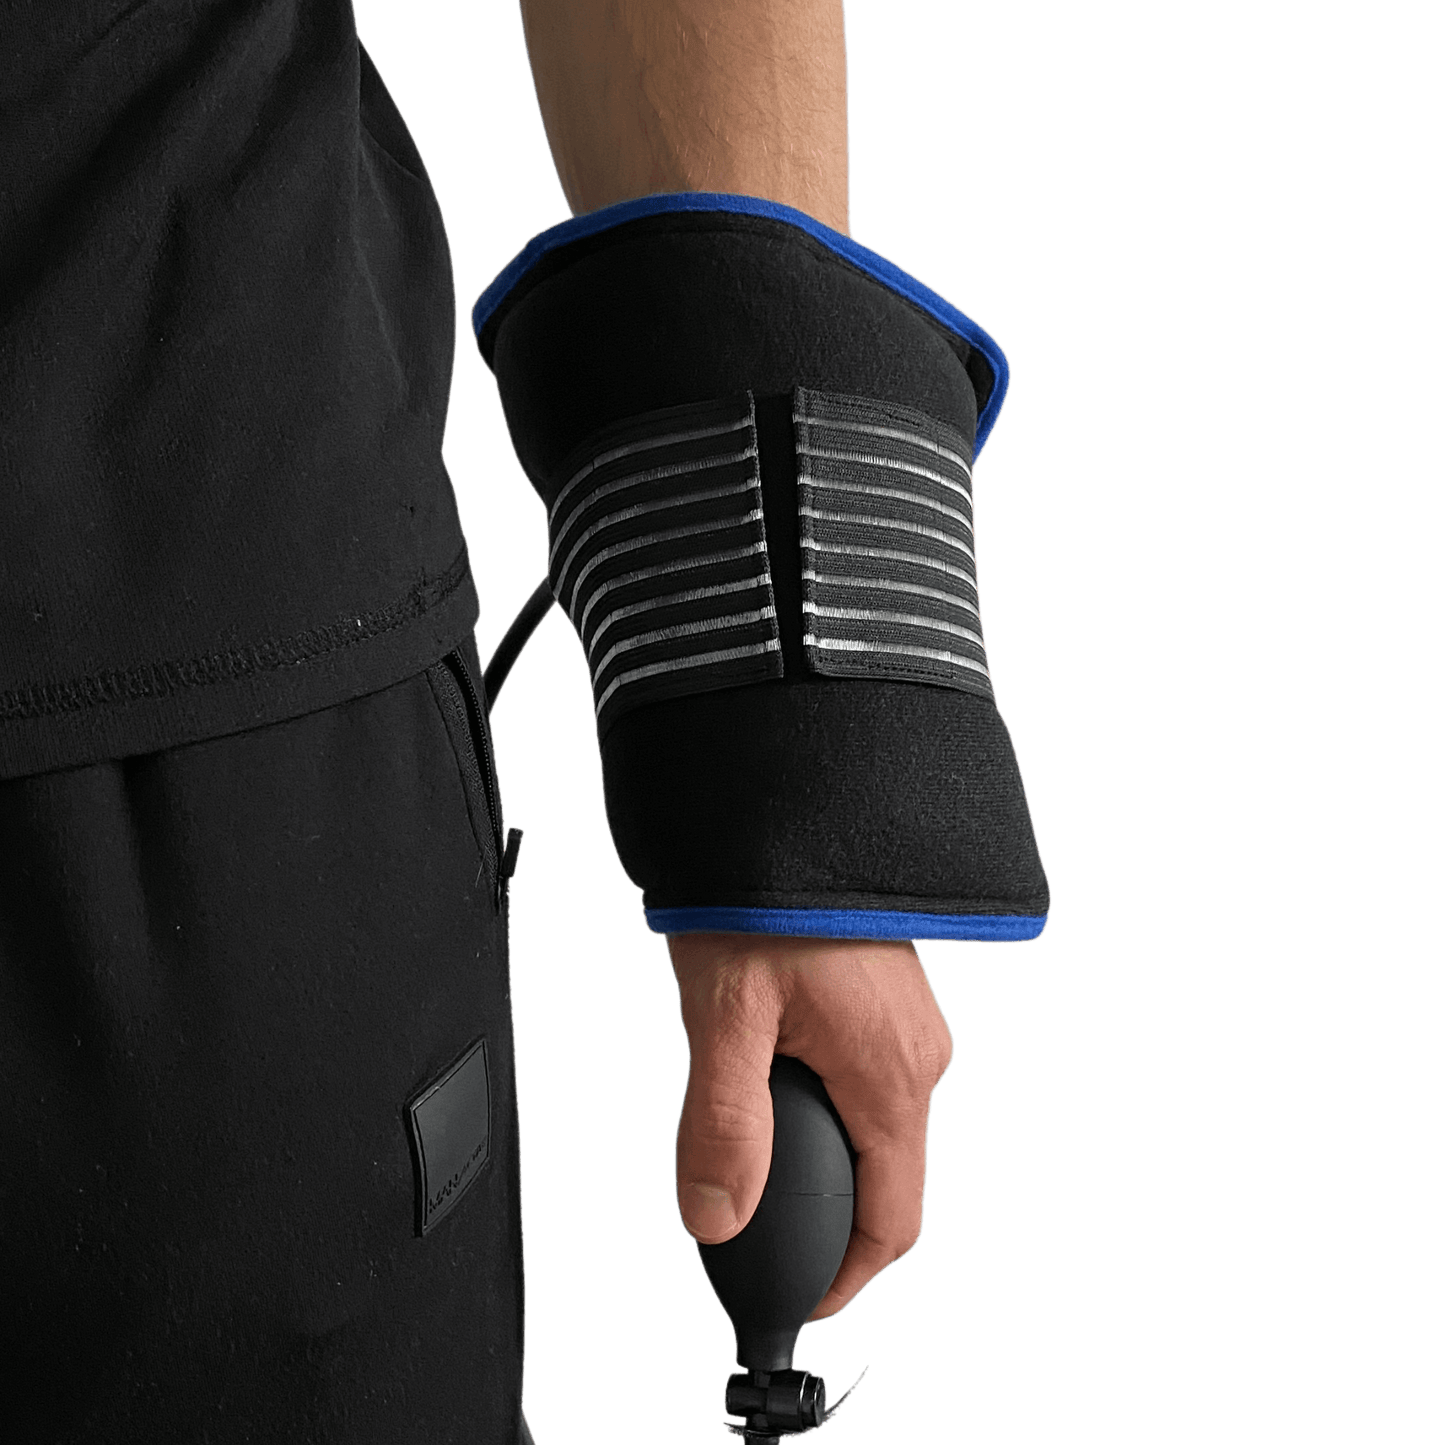 wrist injury aid